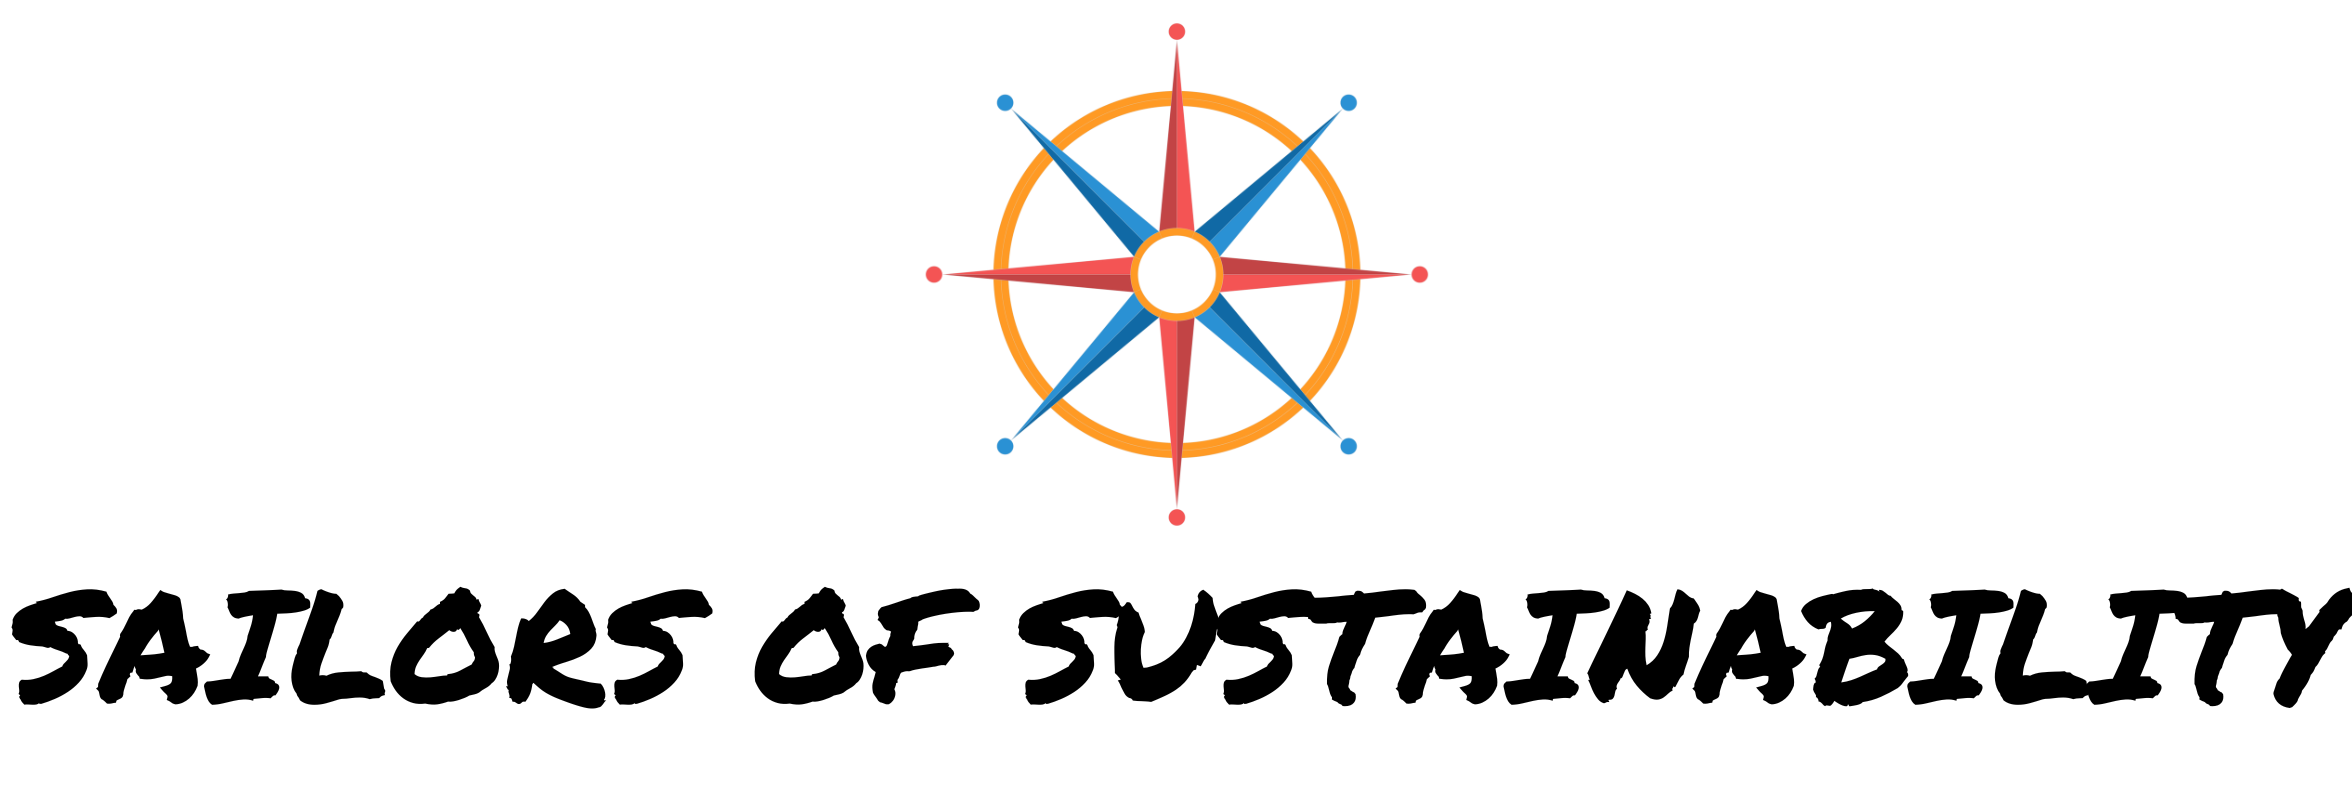 Sailors of Sustainability